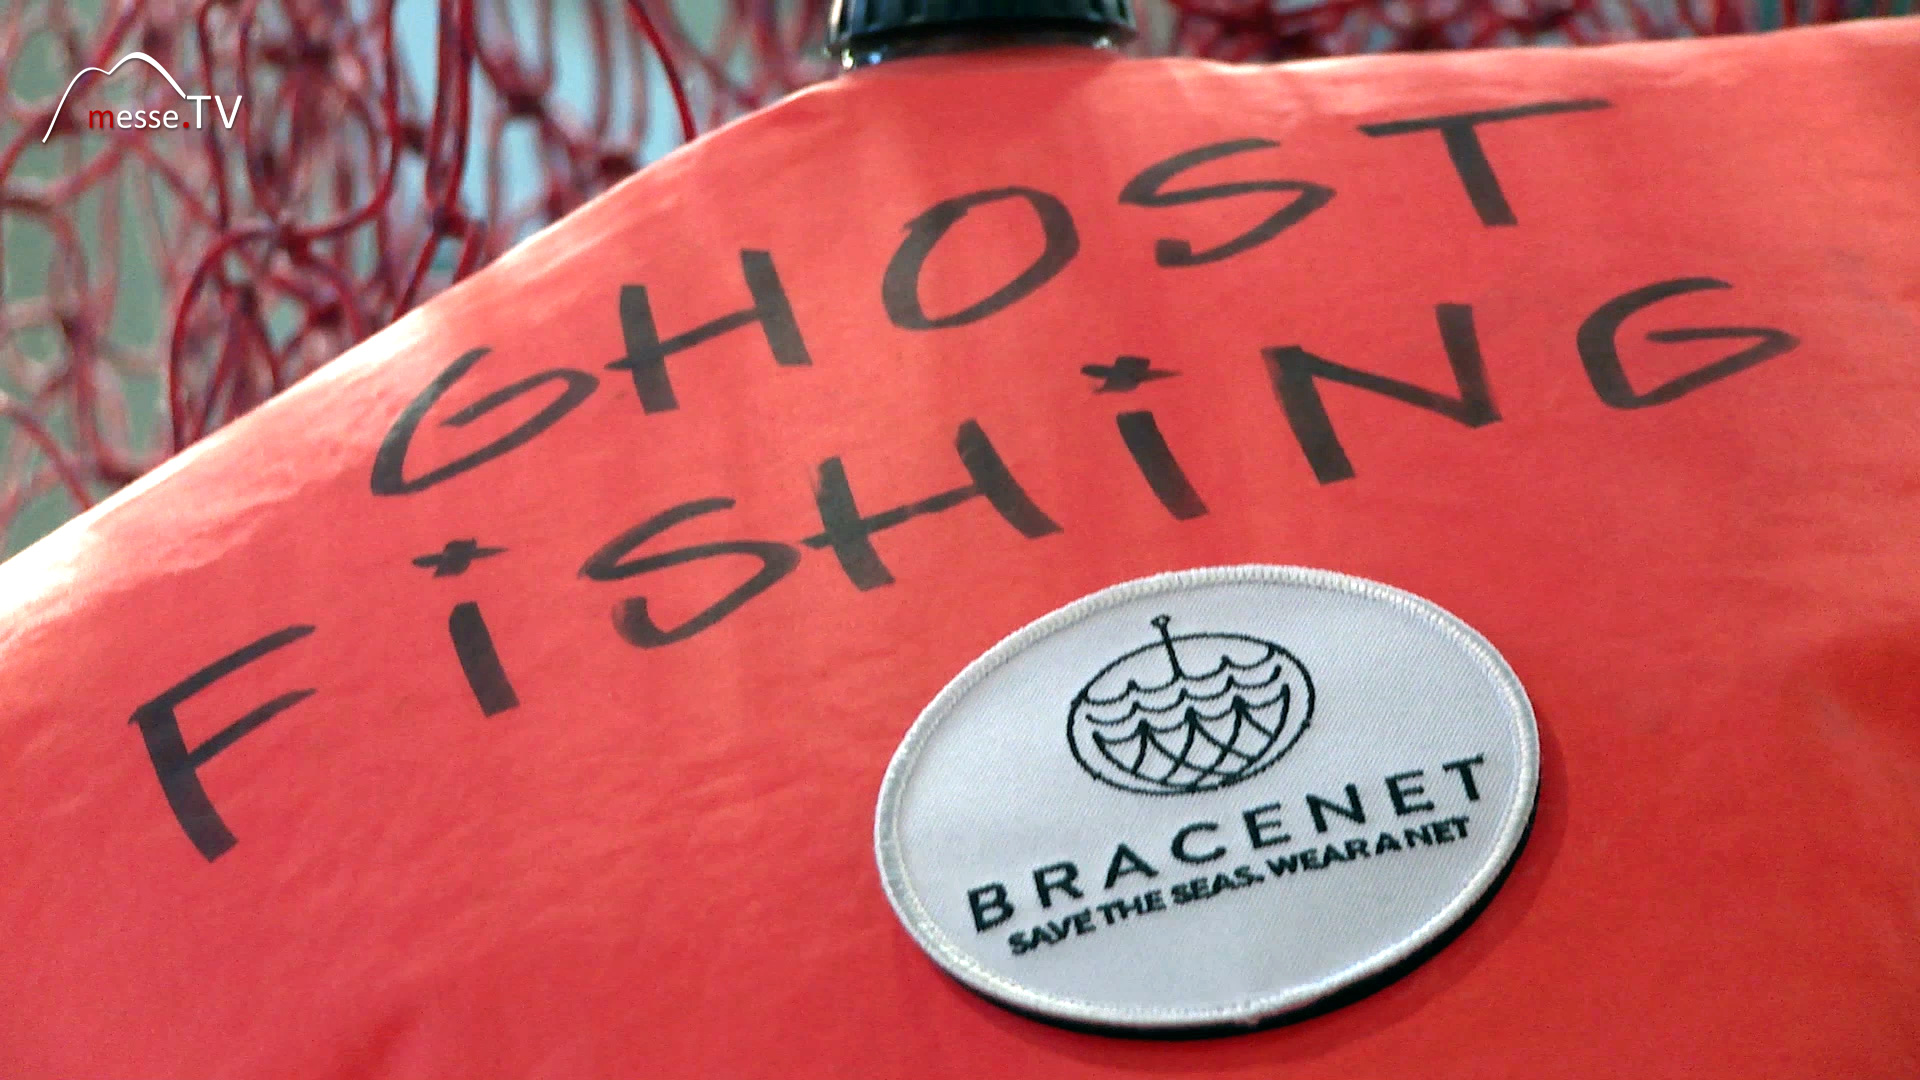 ghost fishing healthy sea Bracenet boat 2020 Dusseldorf